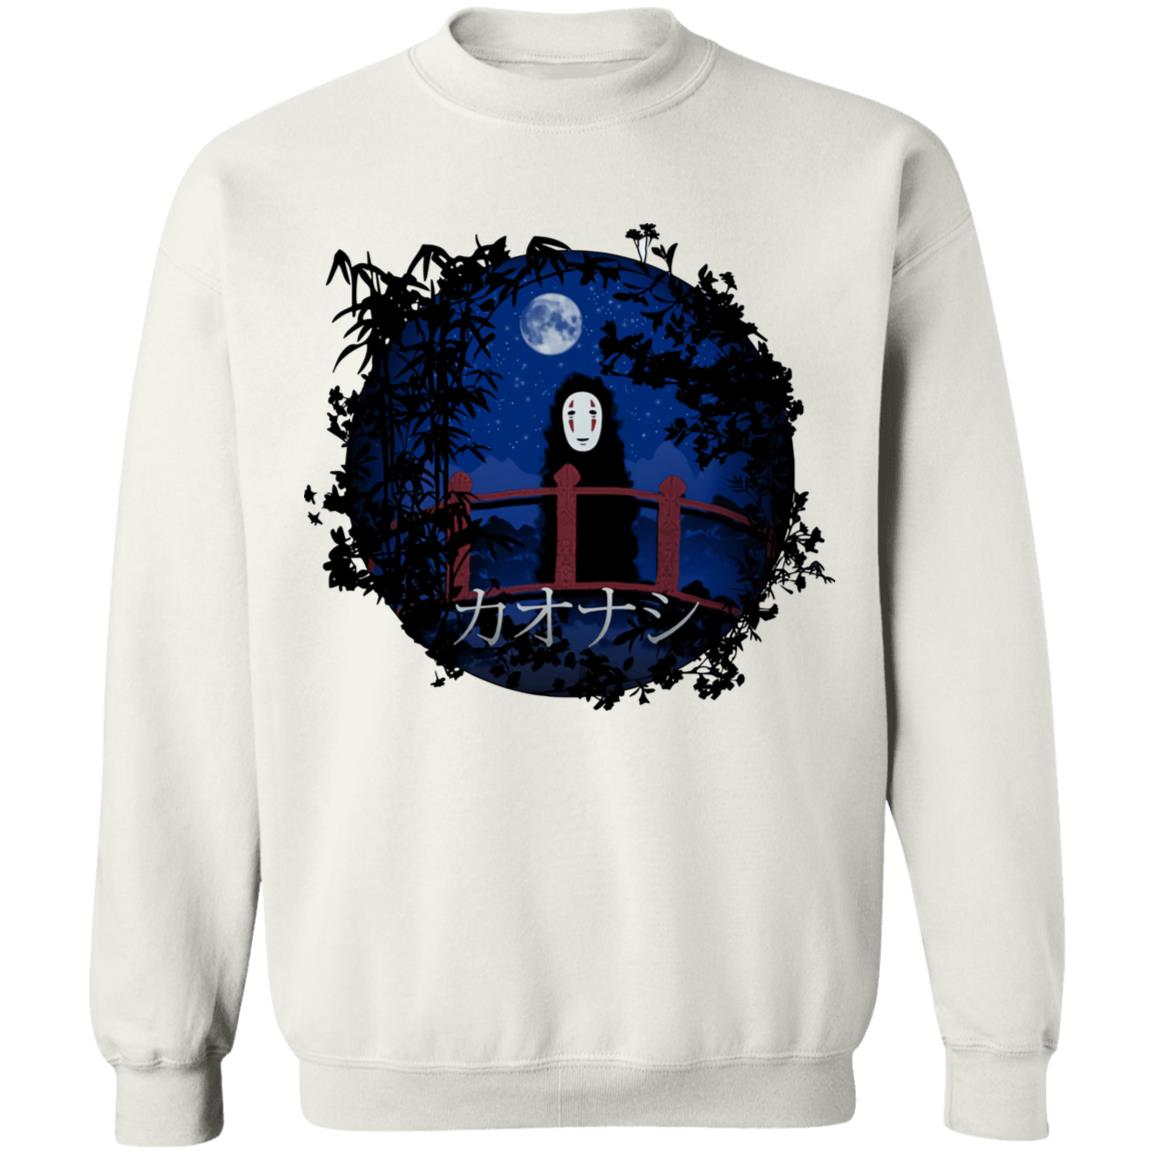 Spirited Away Kaonashi No Face by the blue Moon Sweatshirt